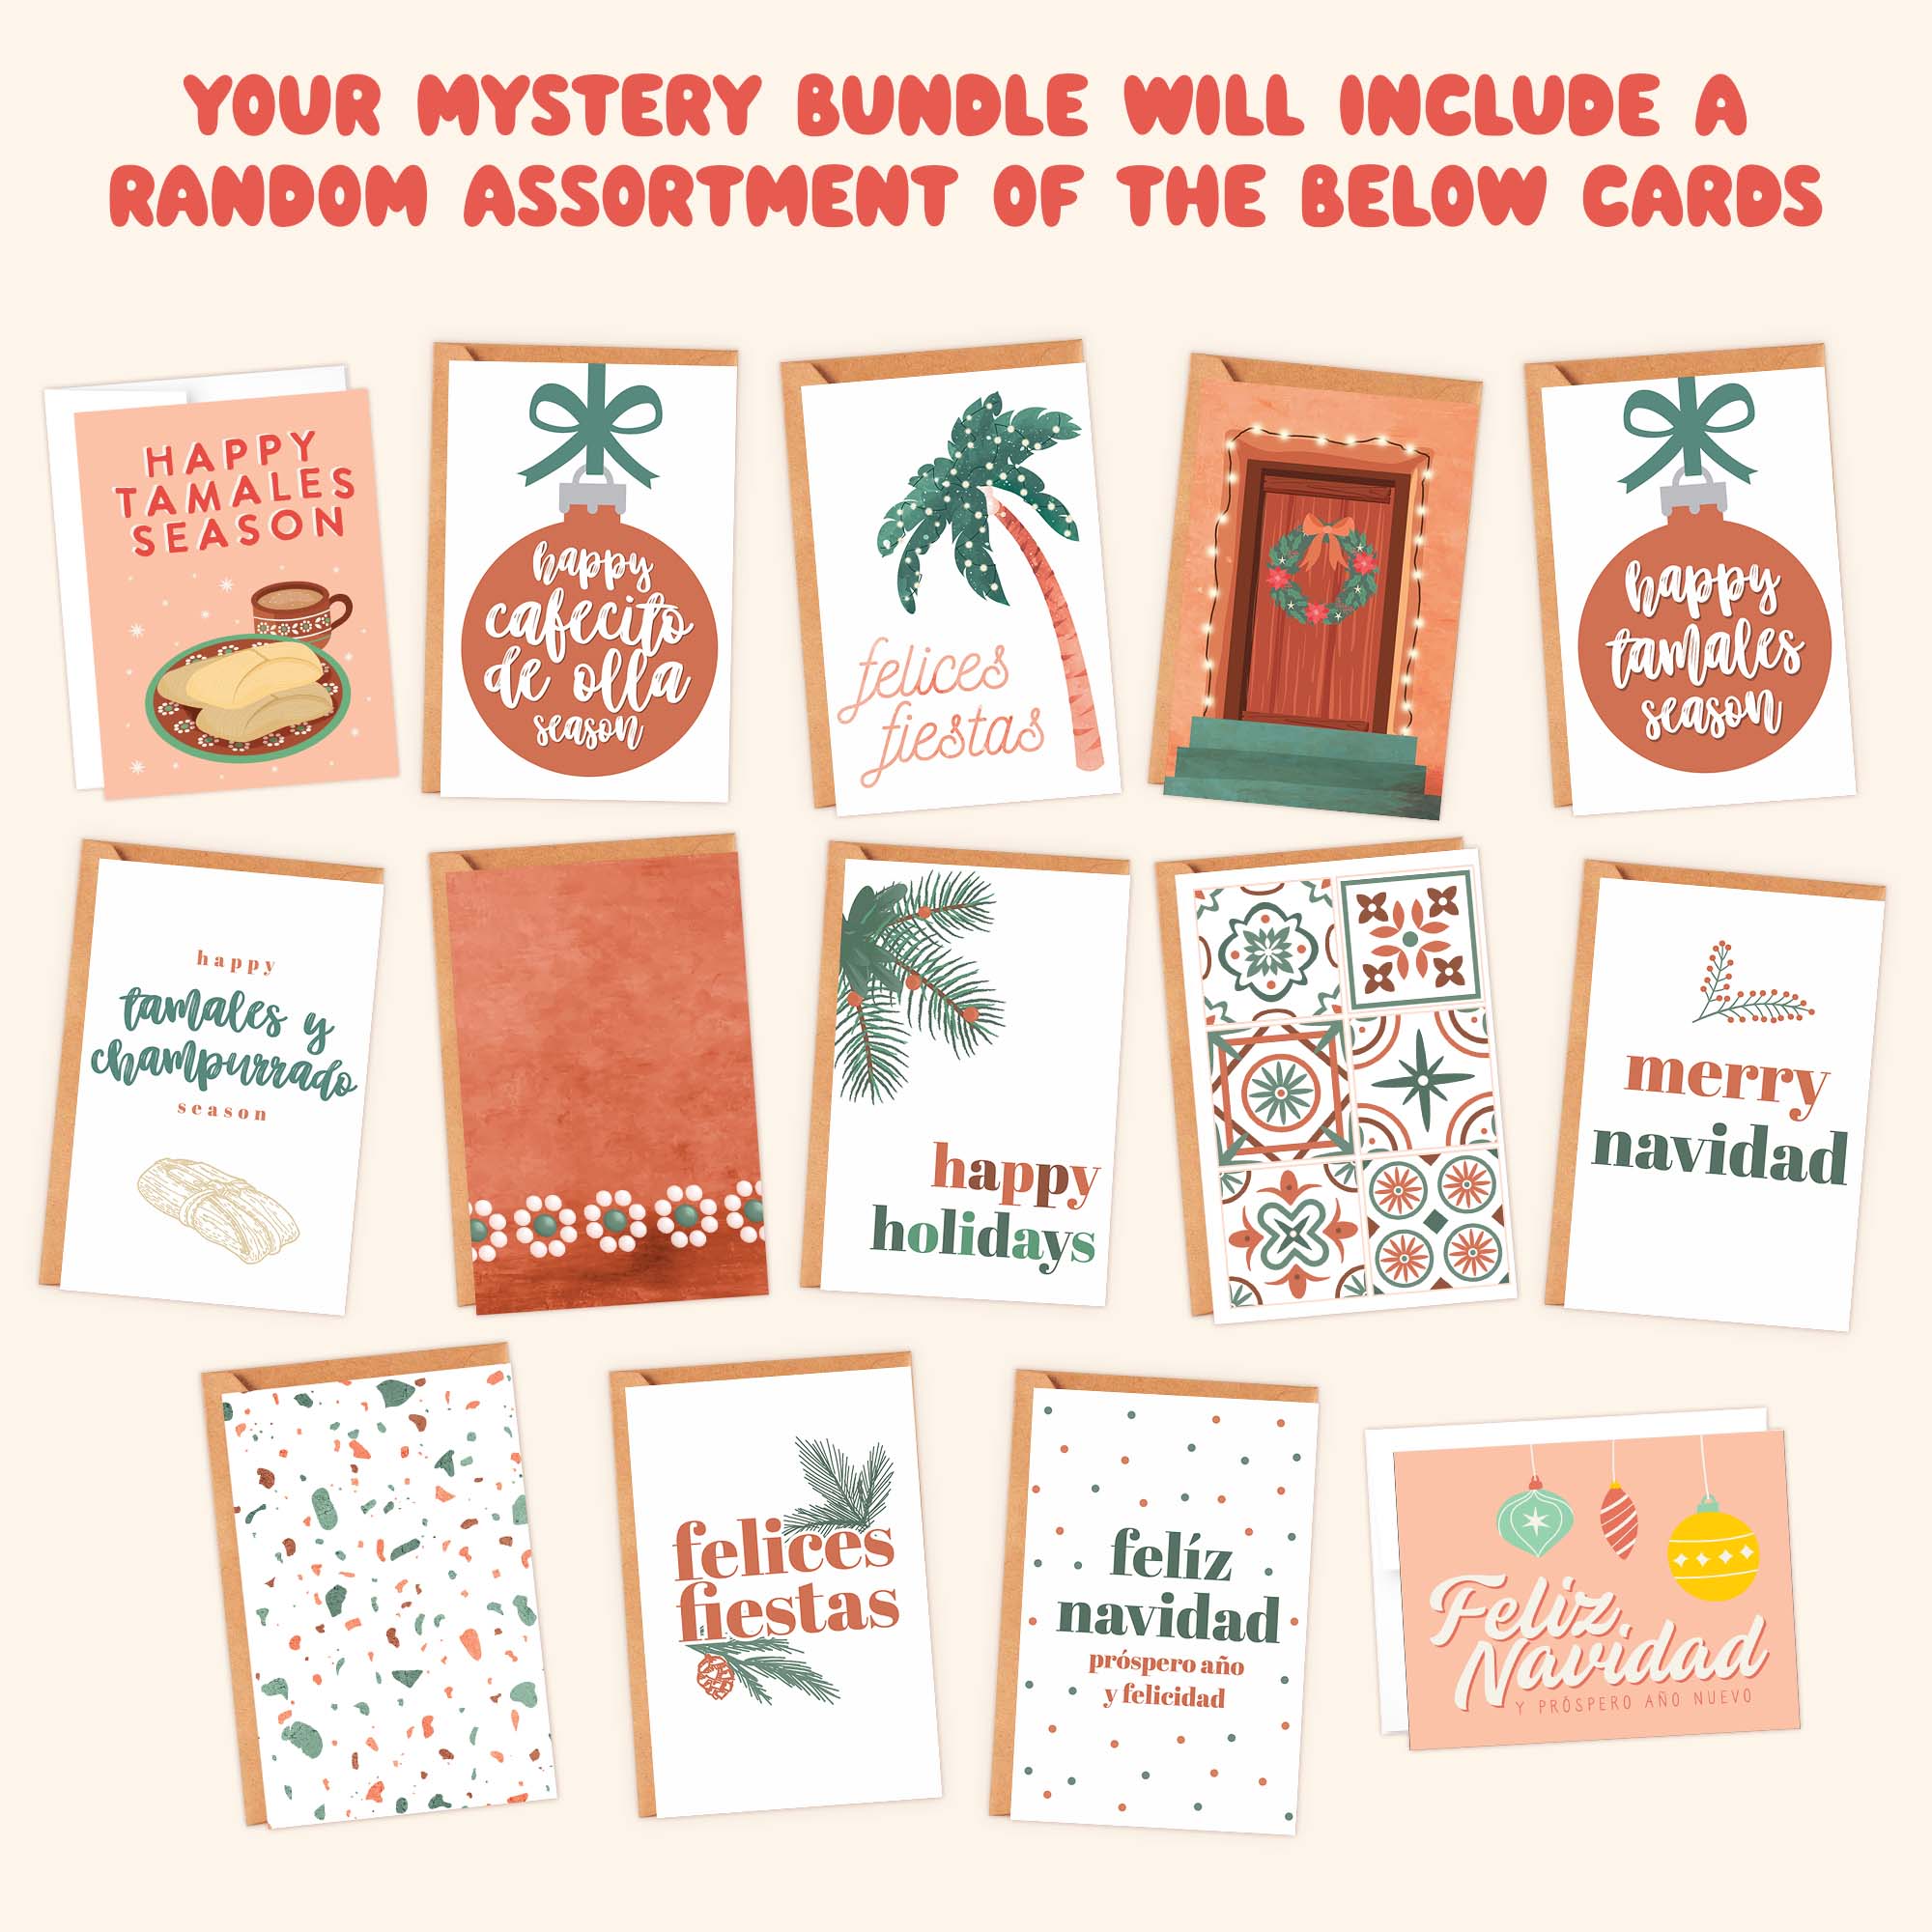 3 Spanglish Holiday Cards Mystery Bundle